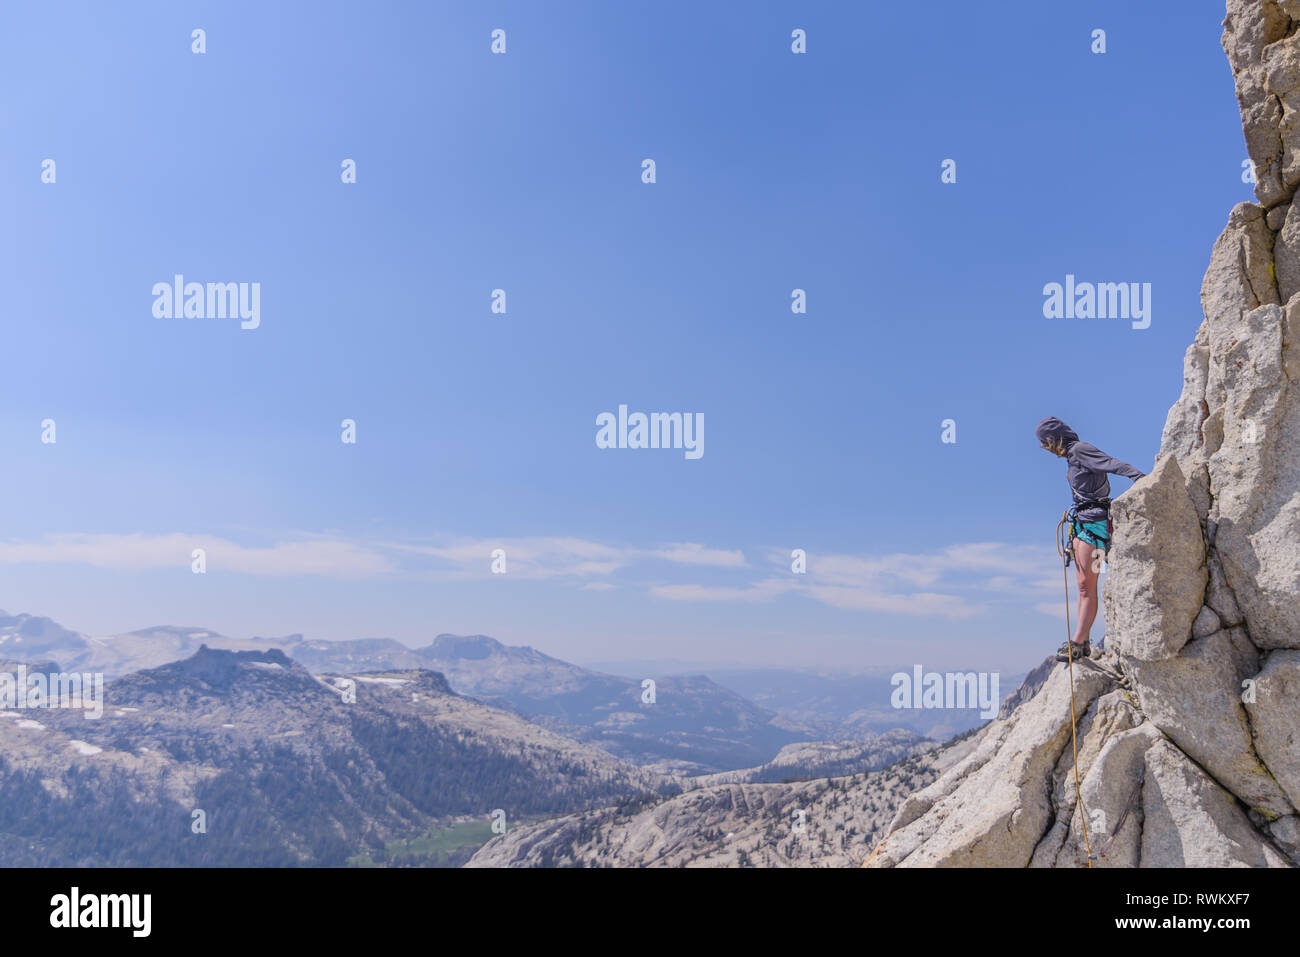 Climber trad climbing, Tuolumne Meadows, Yosemite National Park, California, United States Stock Photo